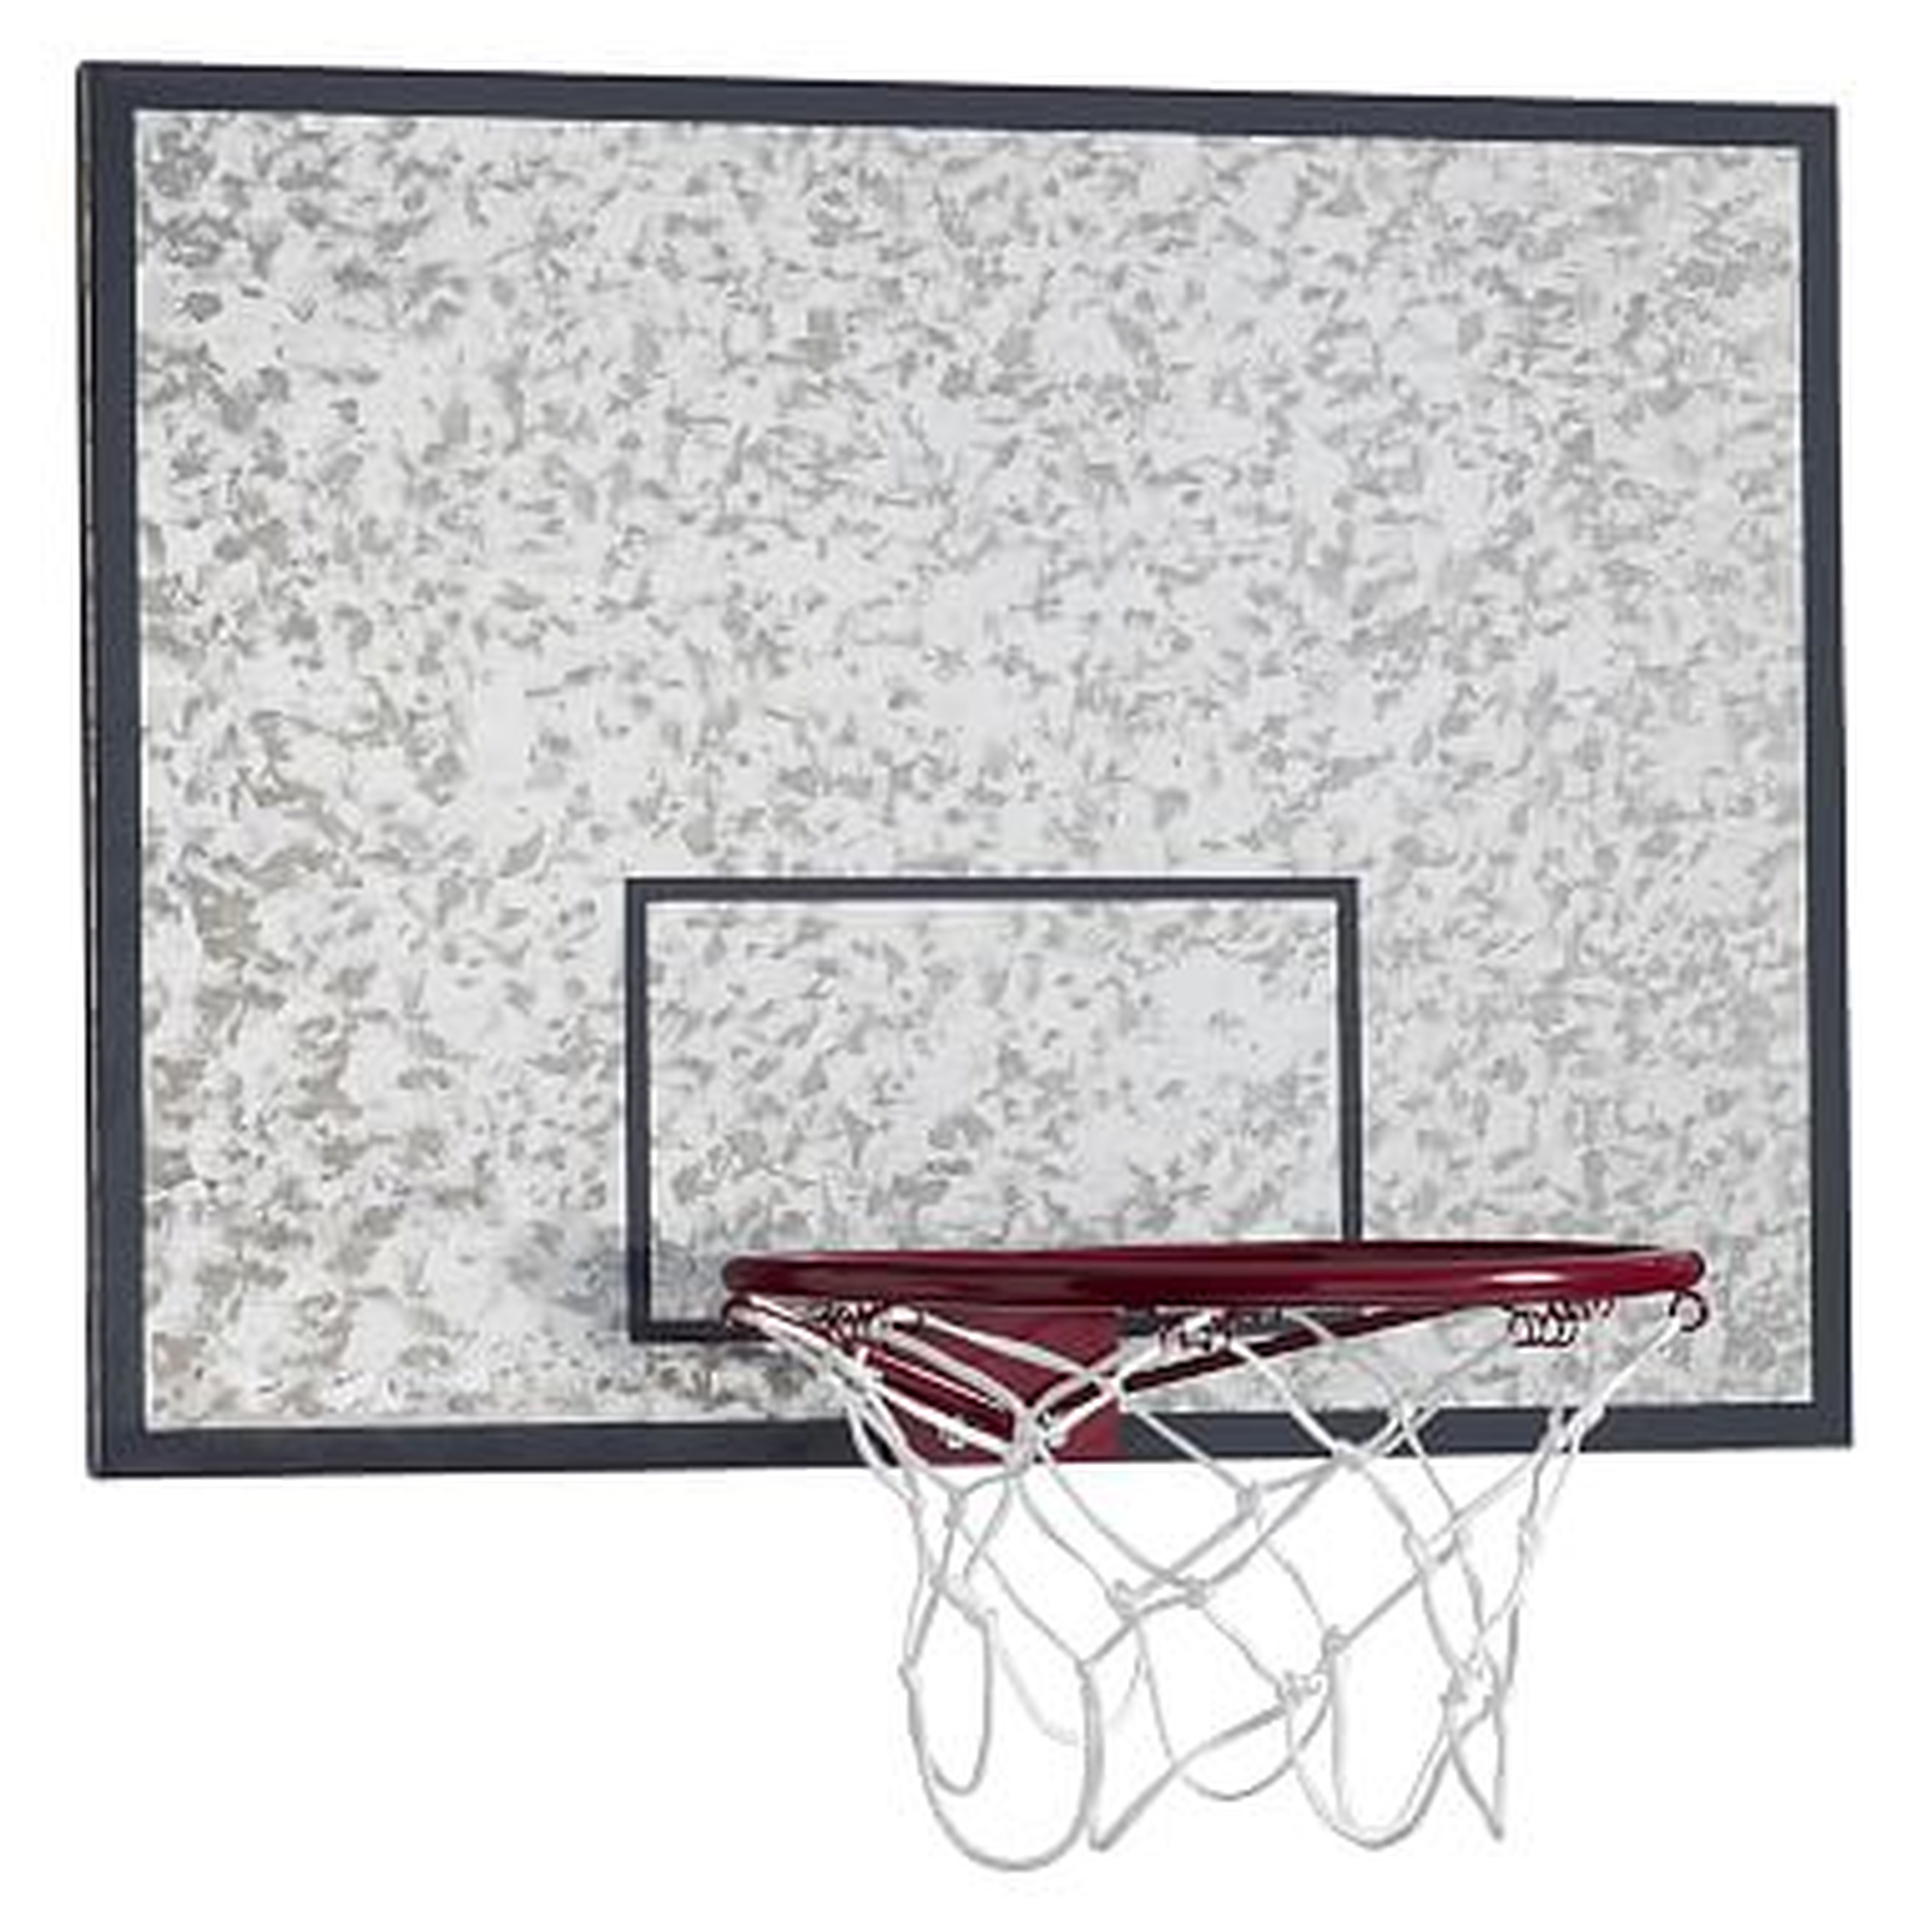 Galvanized Basketball Hoop & Dry-Erase Board - Pottery Barn Teen